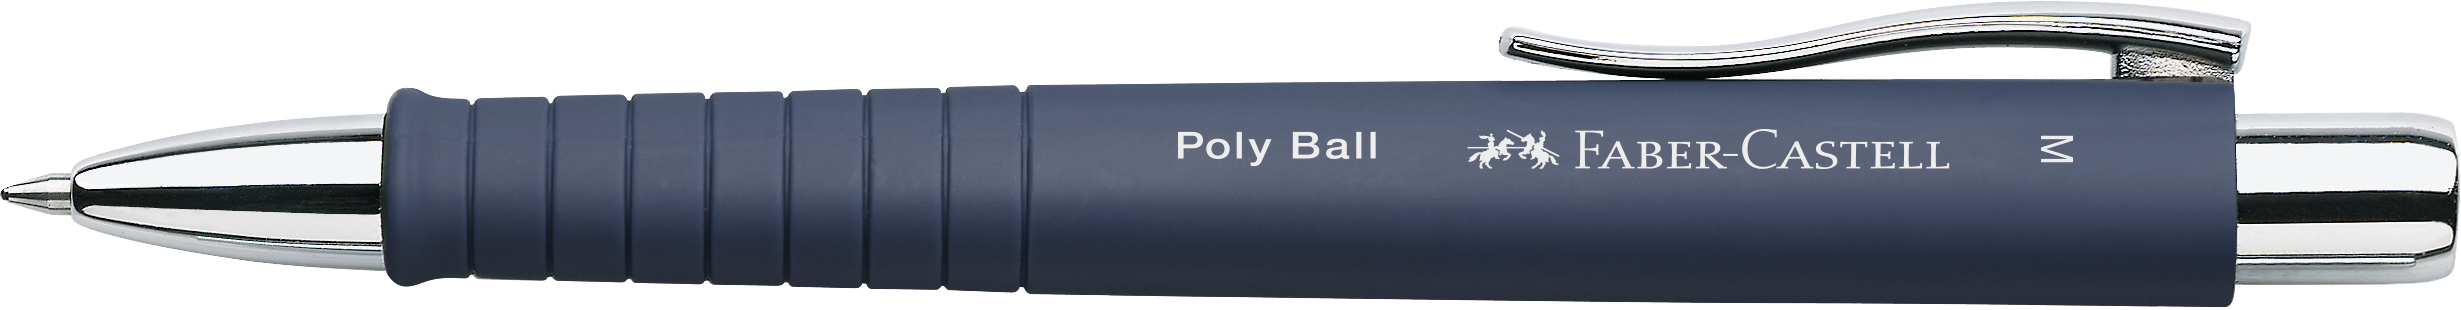 FABER-CASTELL Stylo-bille POLY BALL 0.5mm 2411151 bleu